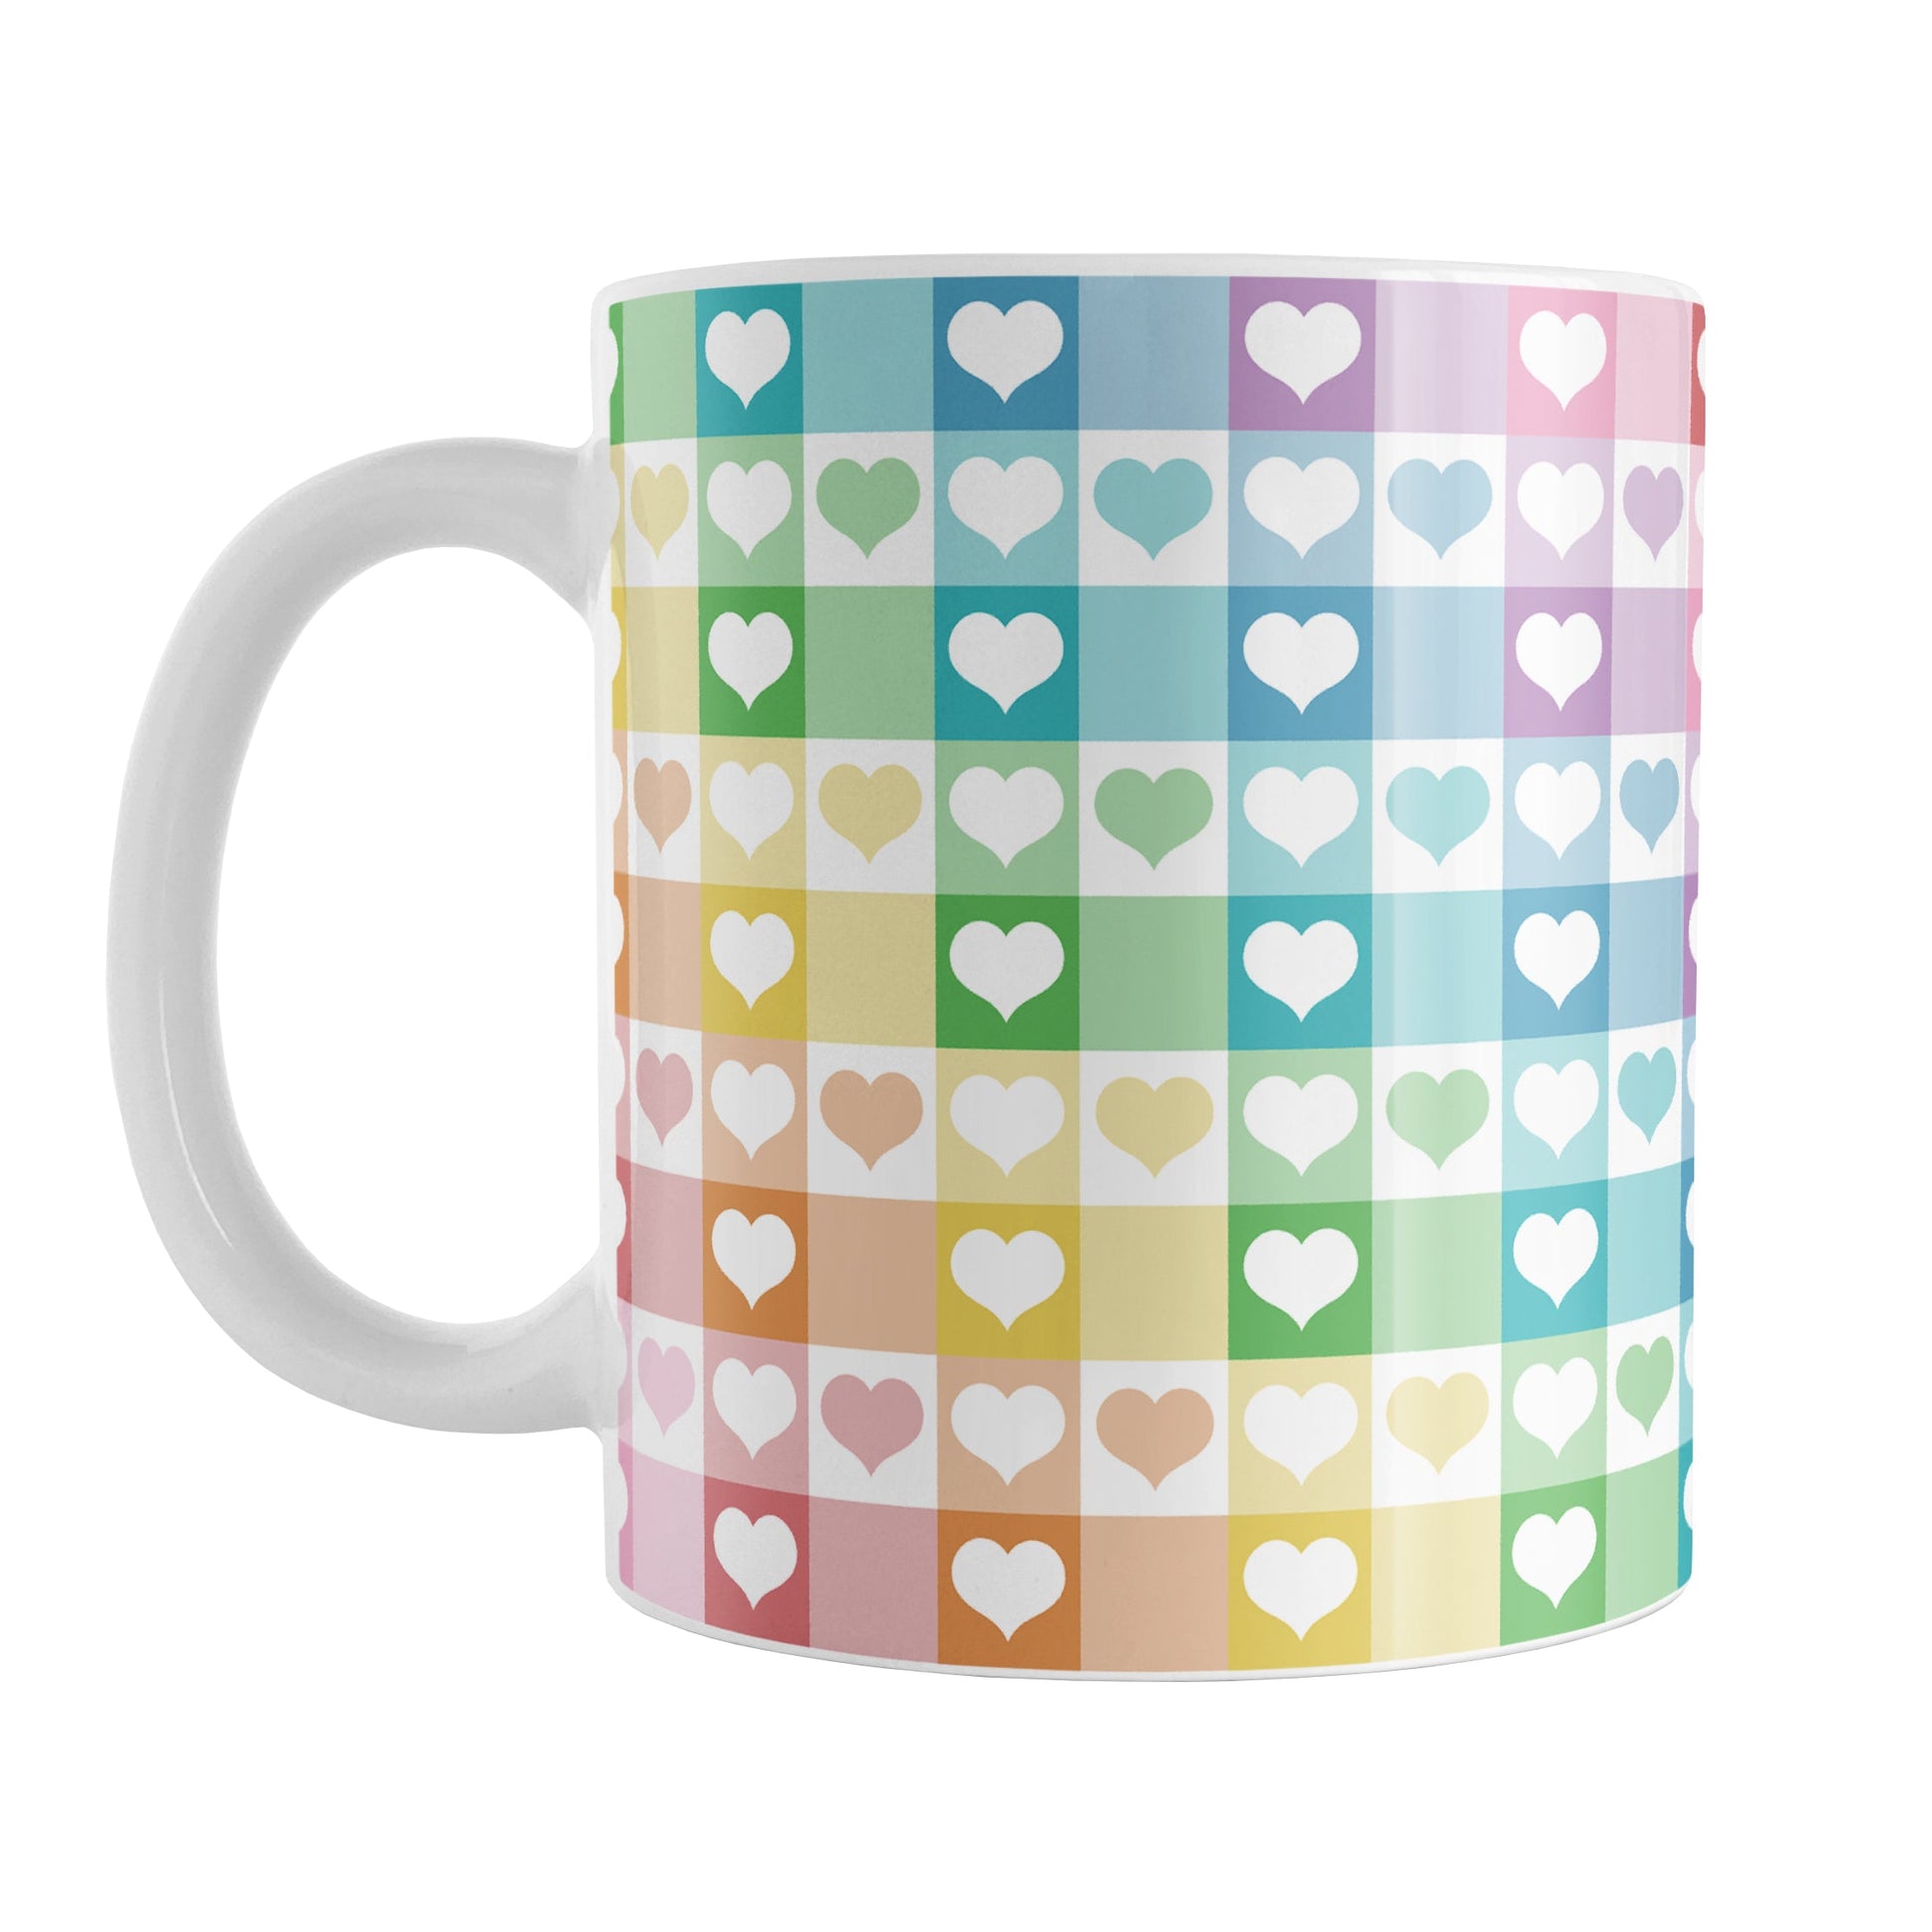 Rainbow Hearts Gingham - Cheerful Checks Mug (11oz) at Amy's Coffee Mugs. A ceramic coffee mug designed with a multi-colored rainbow gingham checks pattern with hearts in it that wraps around the mug to the handle.